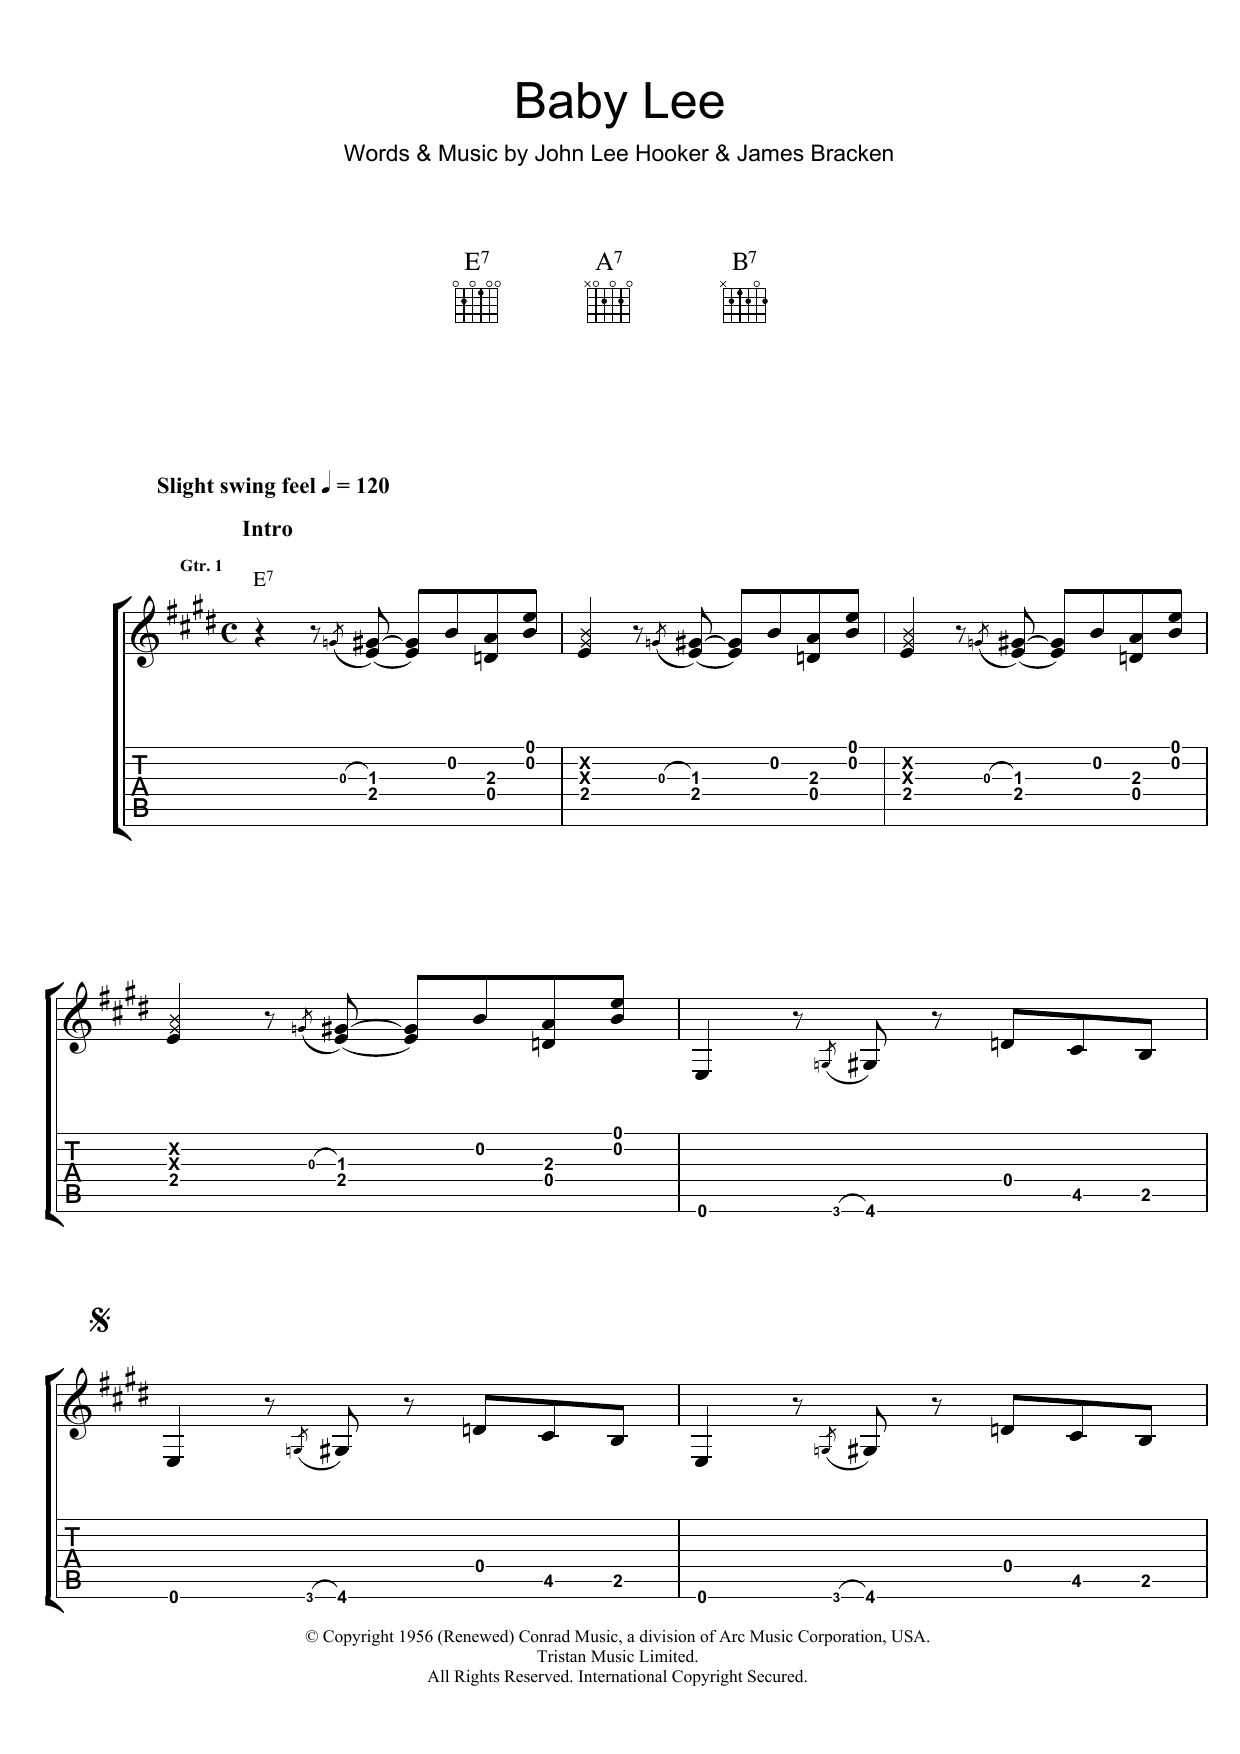 John Lee Hooker Baby Lee Sheet Music Notes & Chords for Guitar Tab - Download or Print PDF